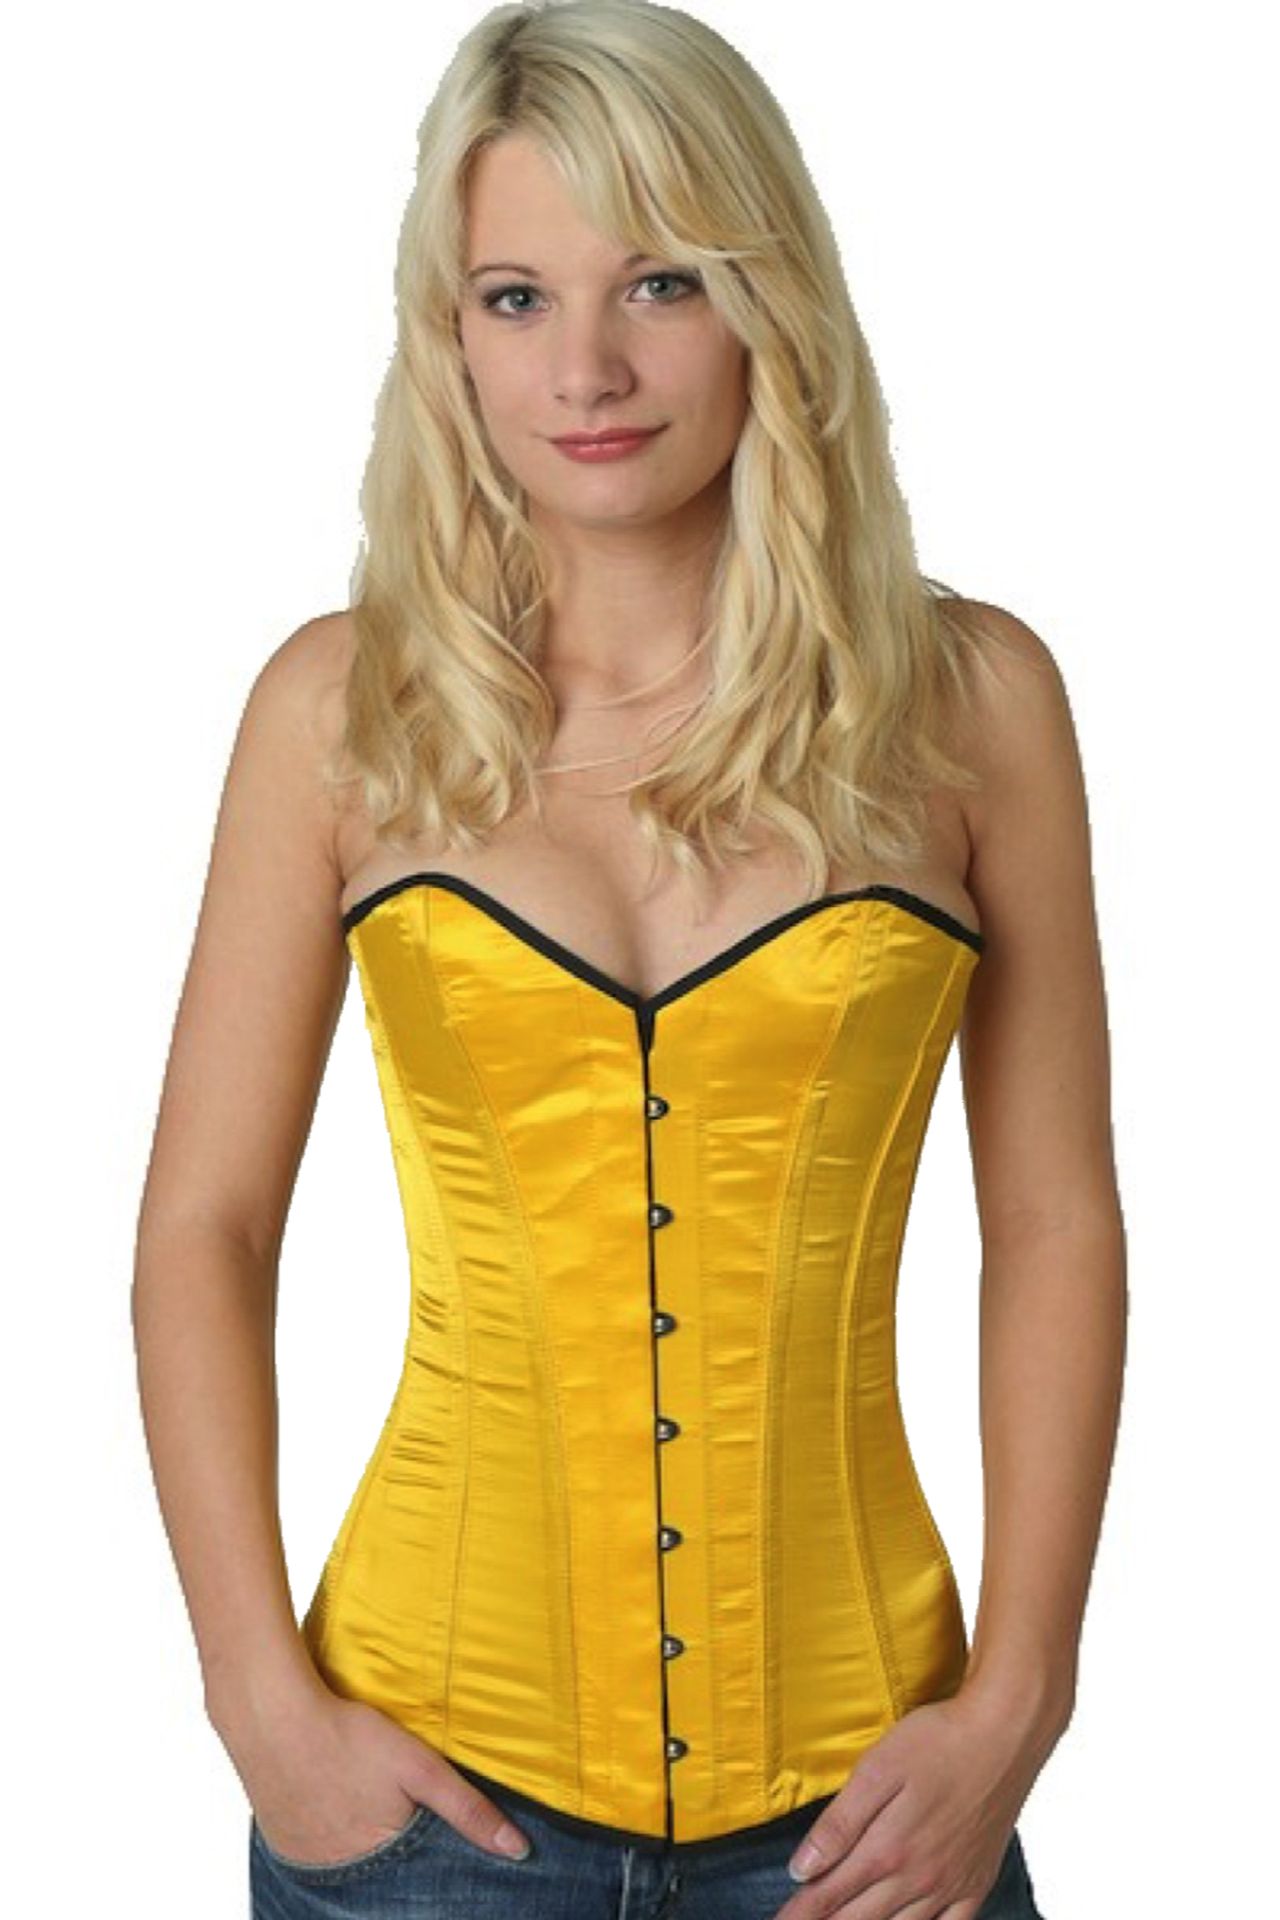 Corse amarillo mango raso sobre pecho corset sy13